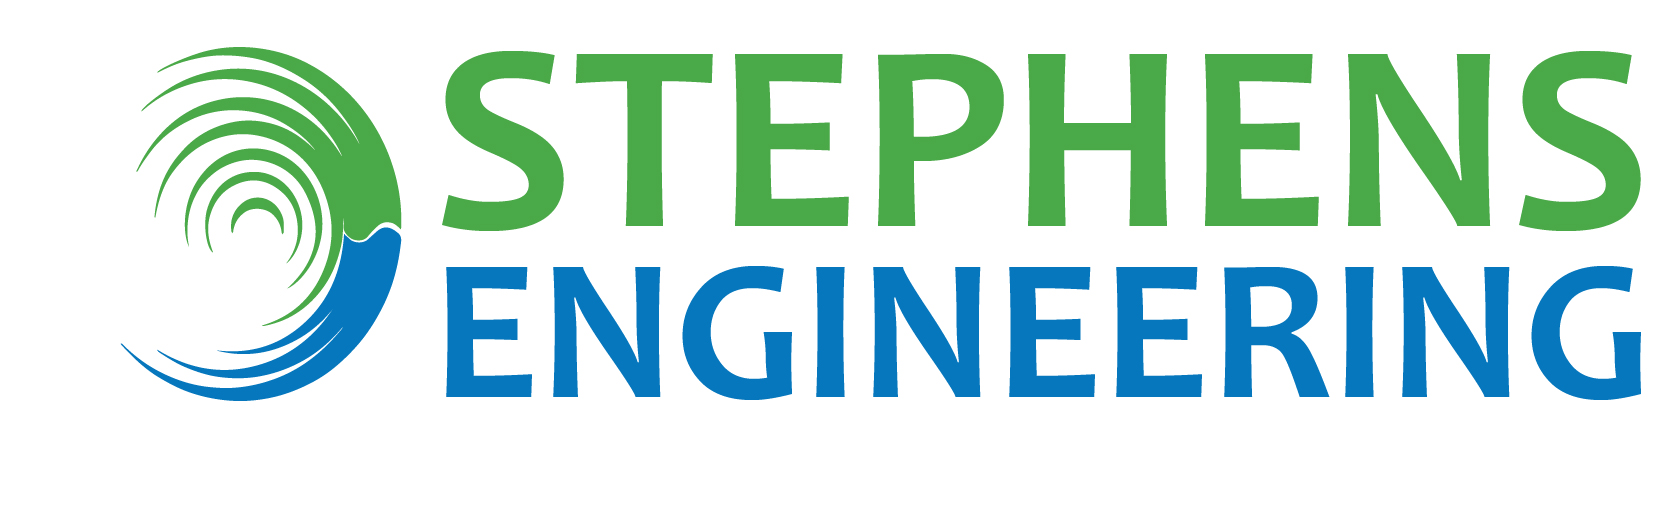 Stephens Engineering University